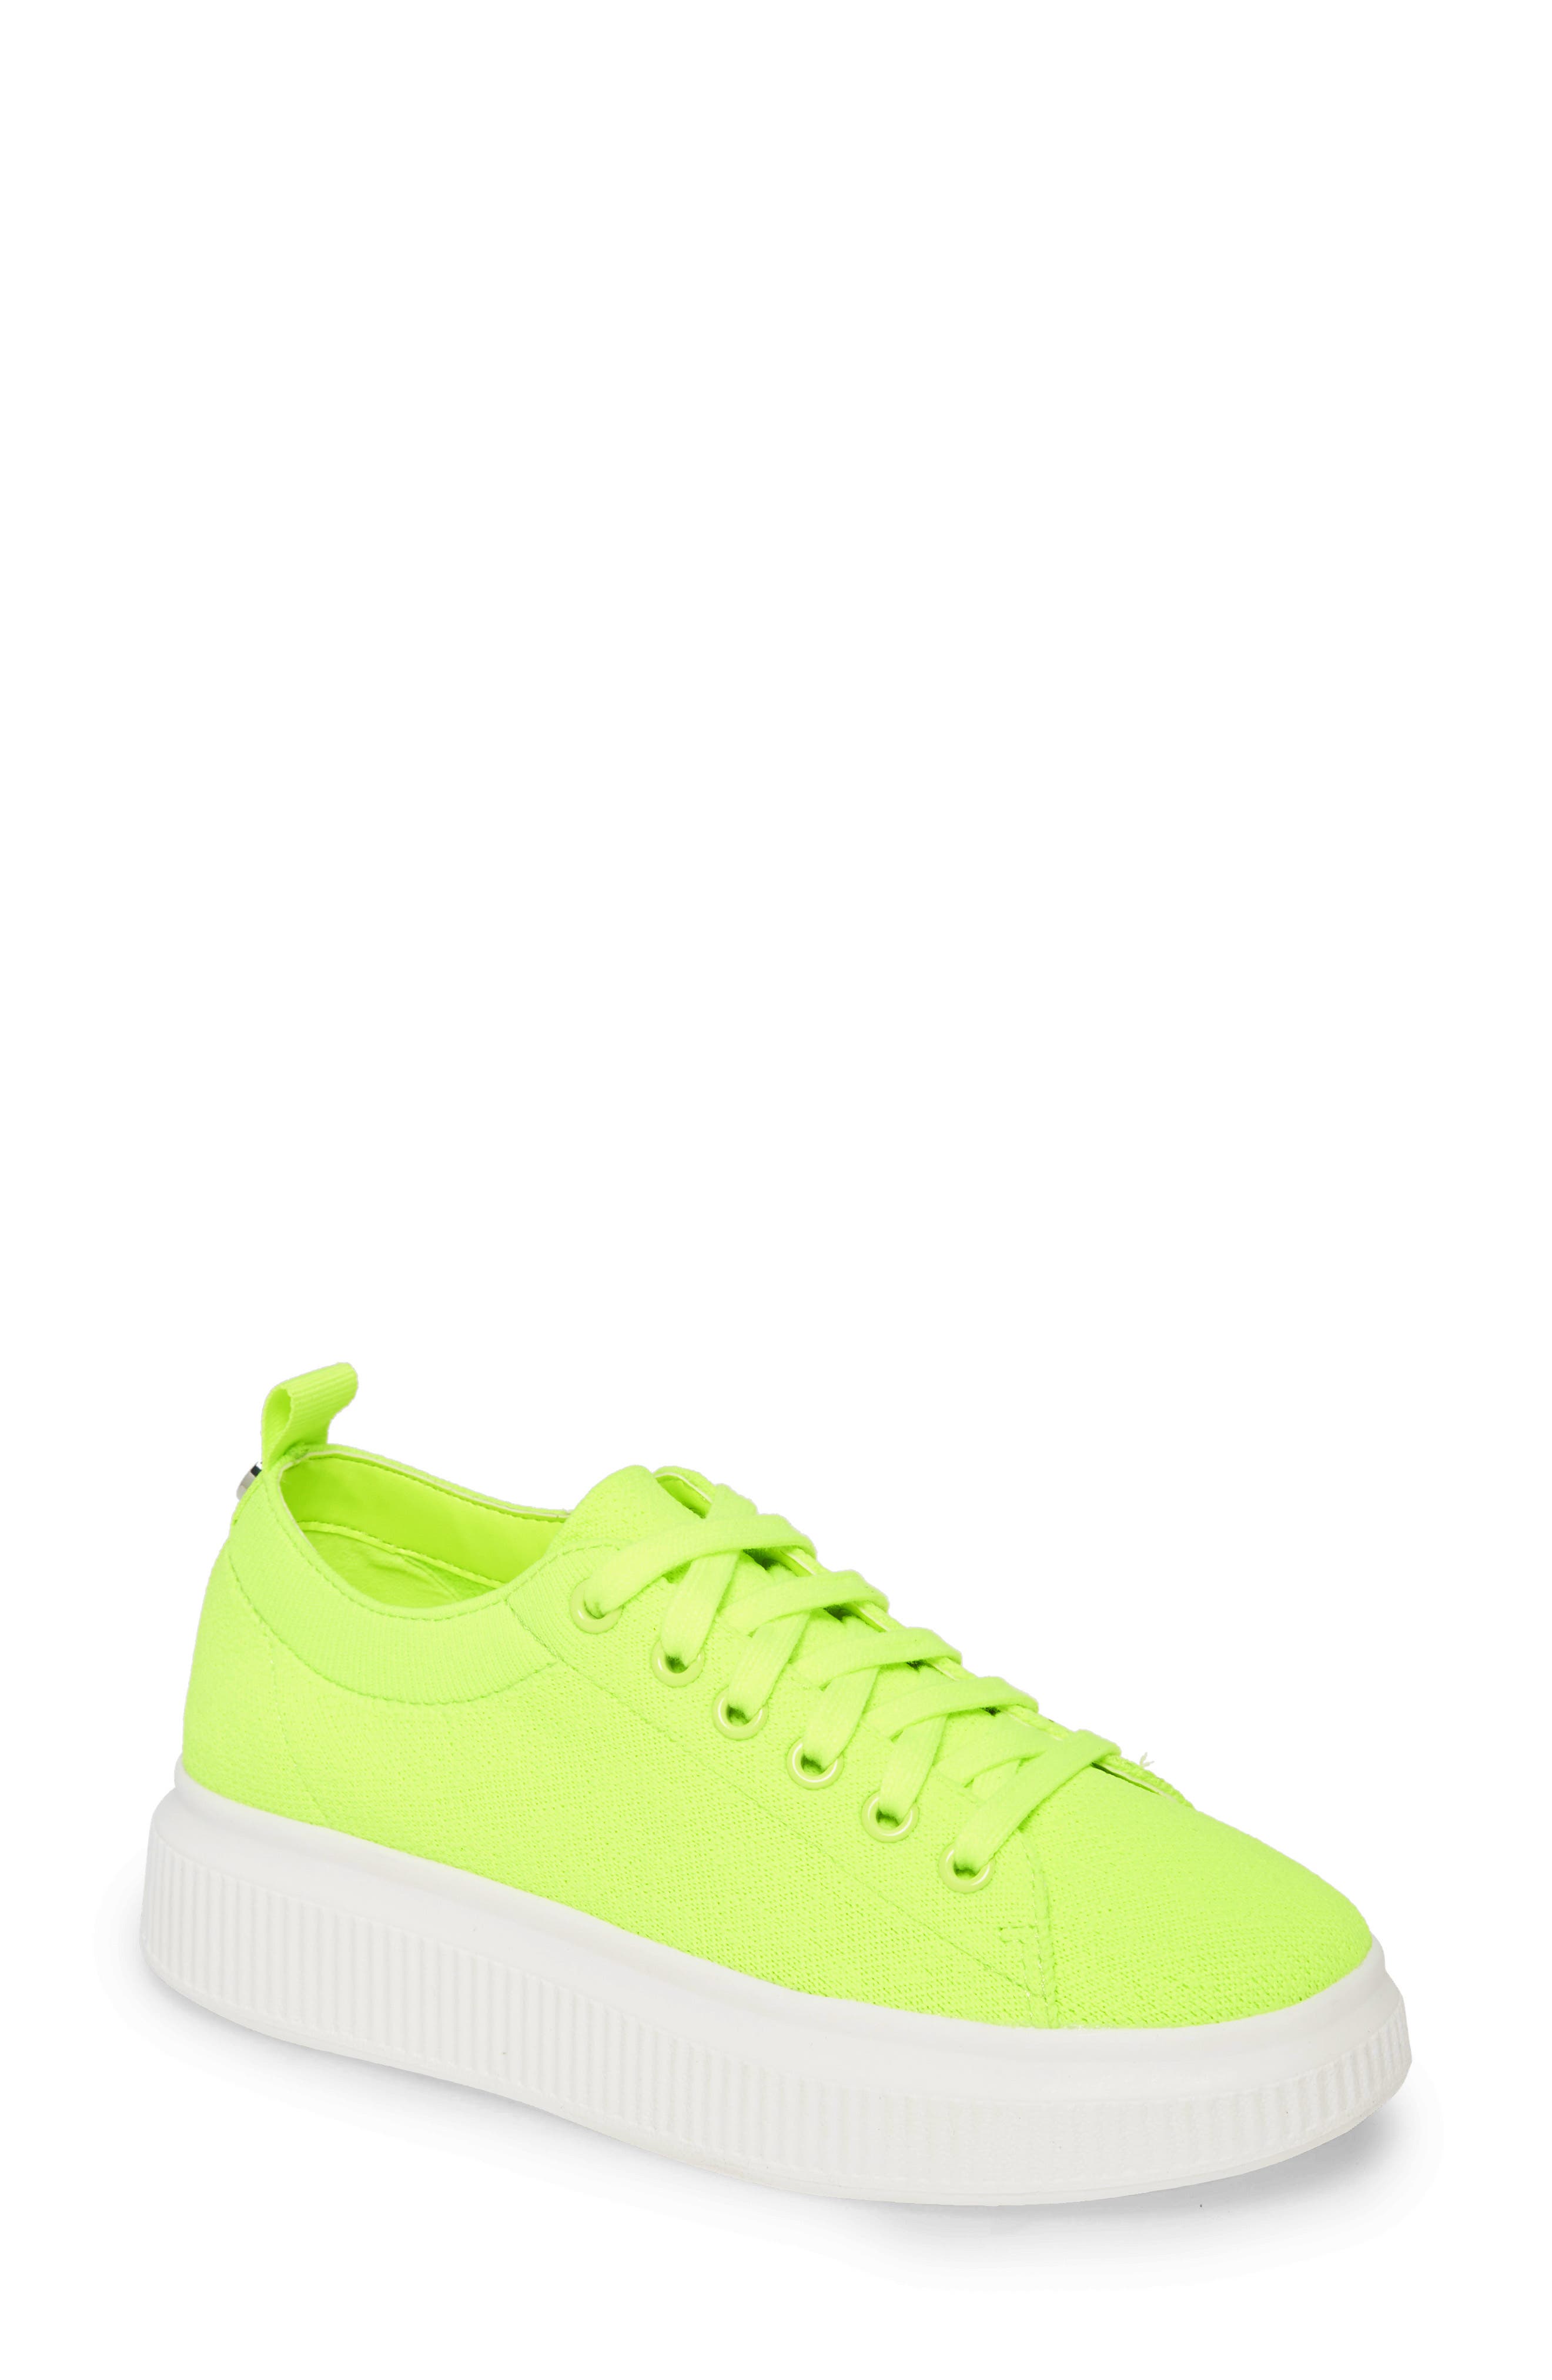 neon green sneakers womens